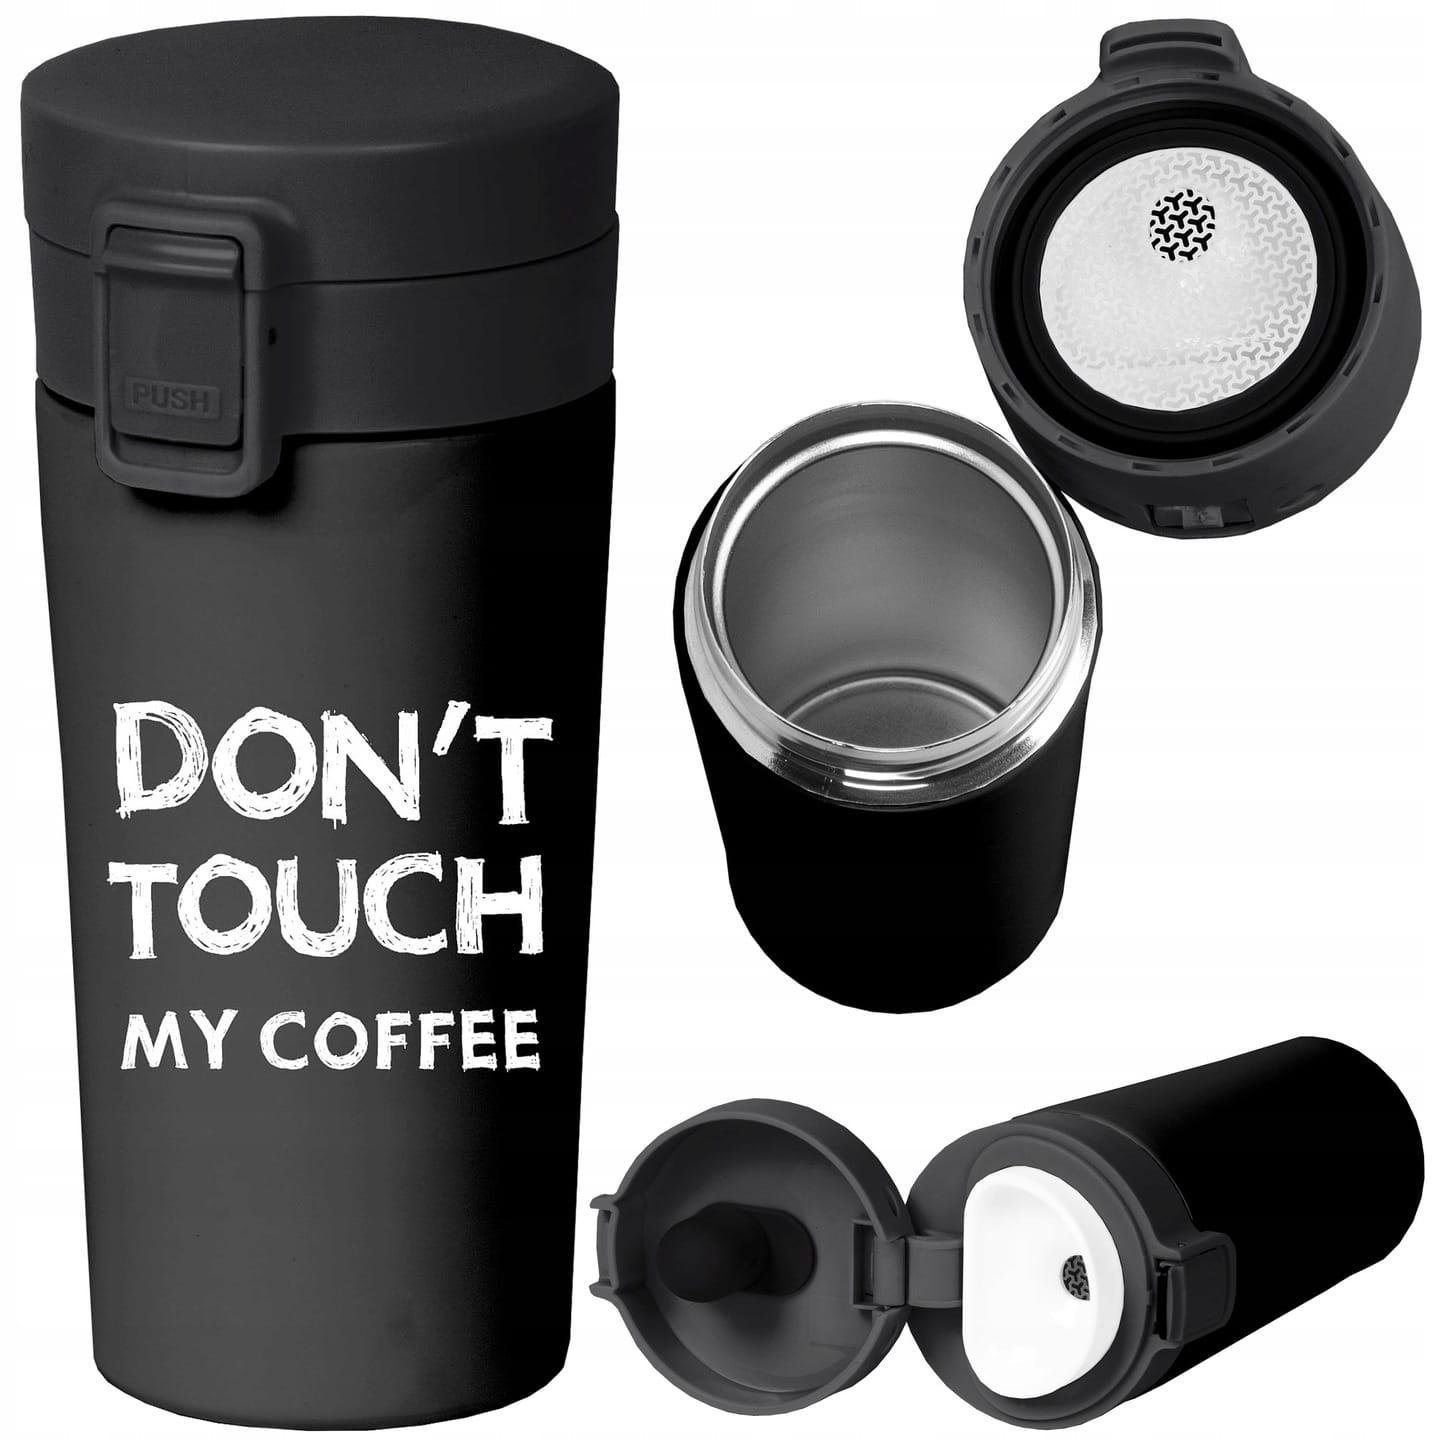 Termo šolja : DON'T TOUCH MY COFFEE 